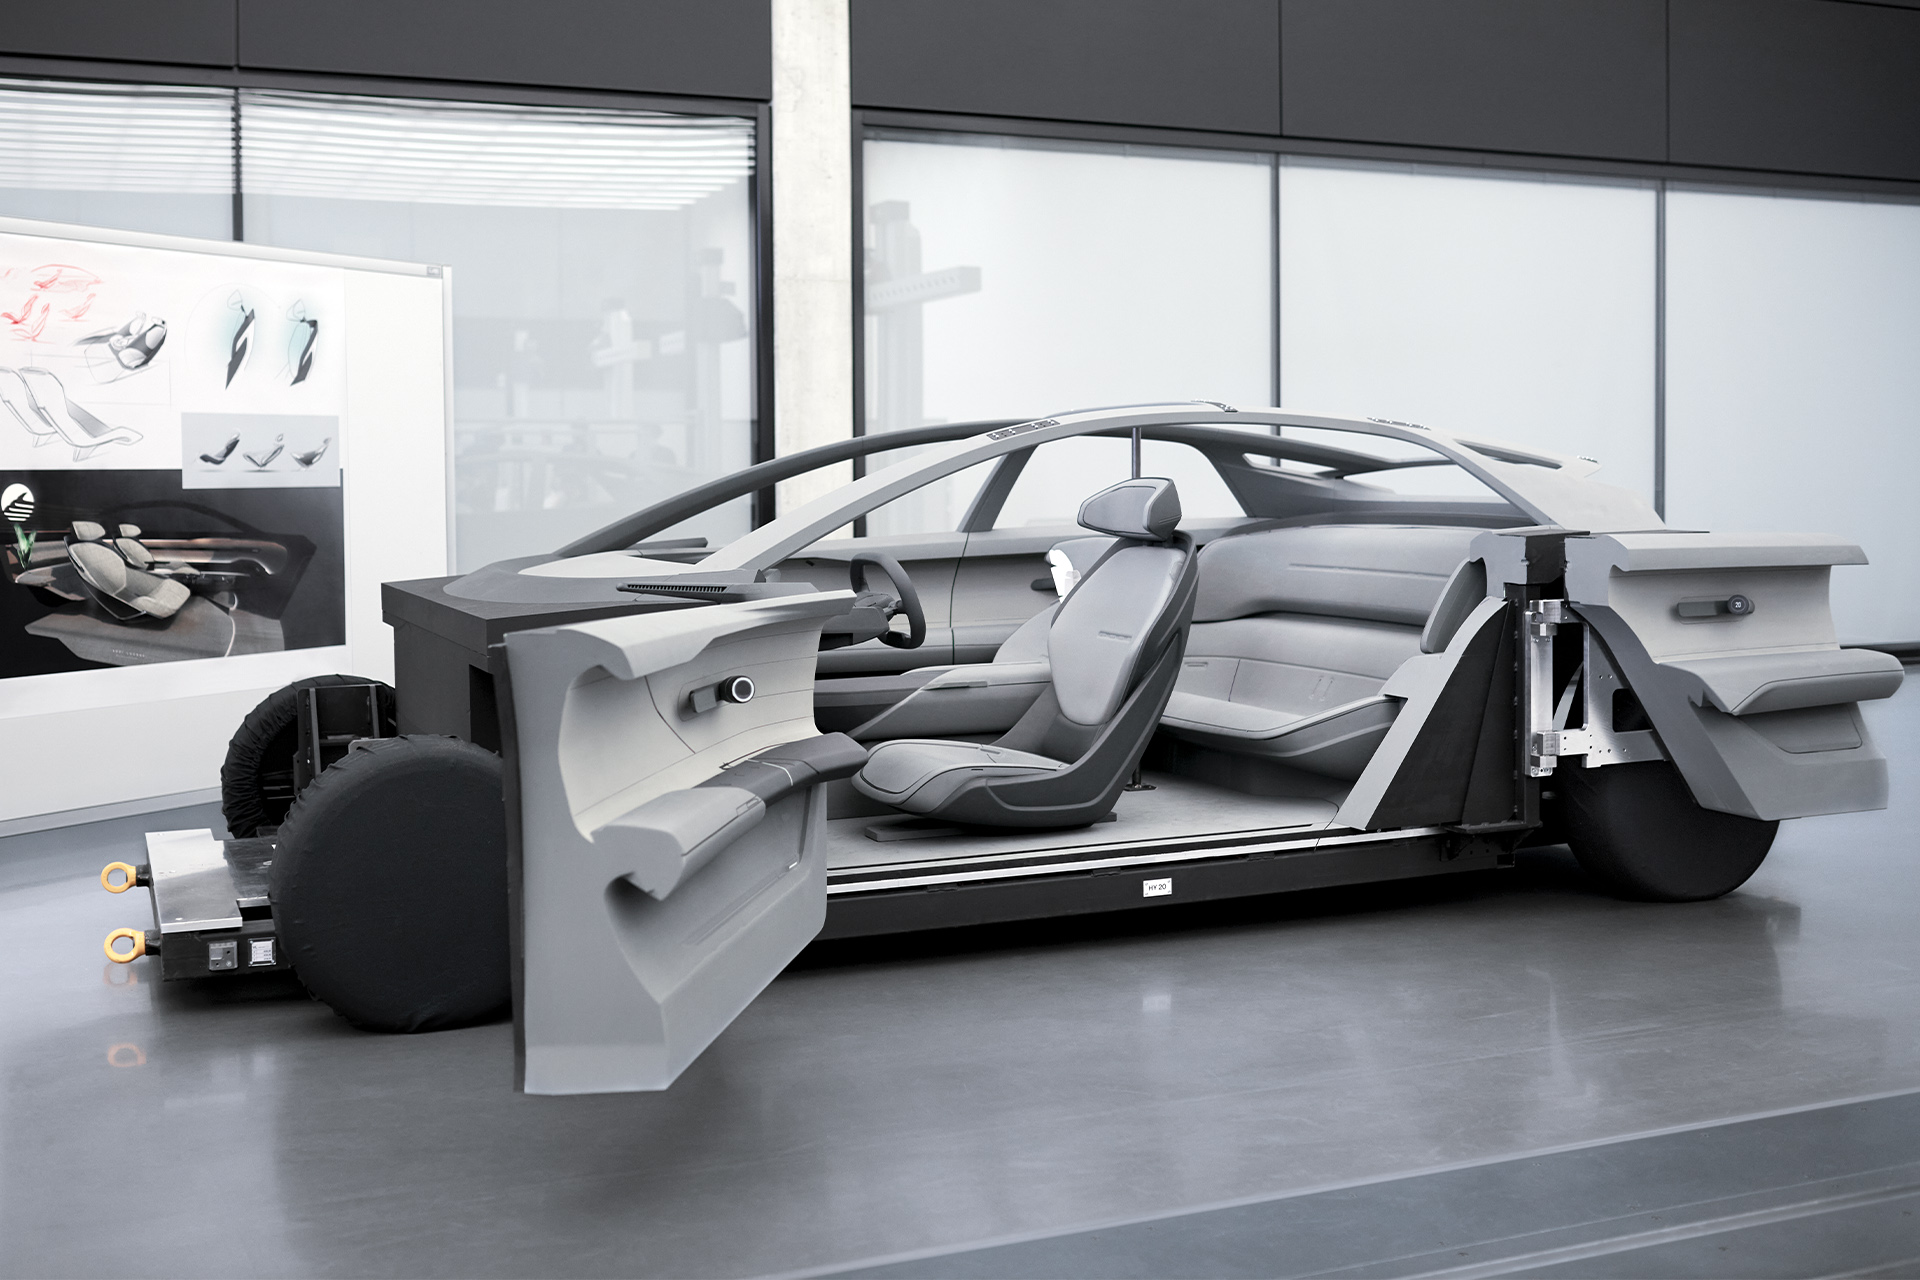 Modell des Audi grandsphere concept{ft_showcar} mit geöffneten Türen.